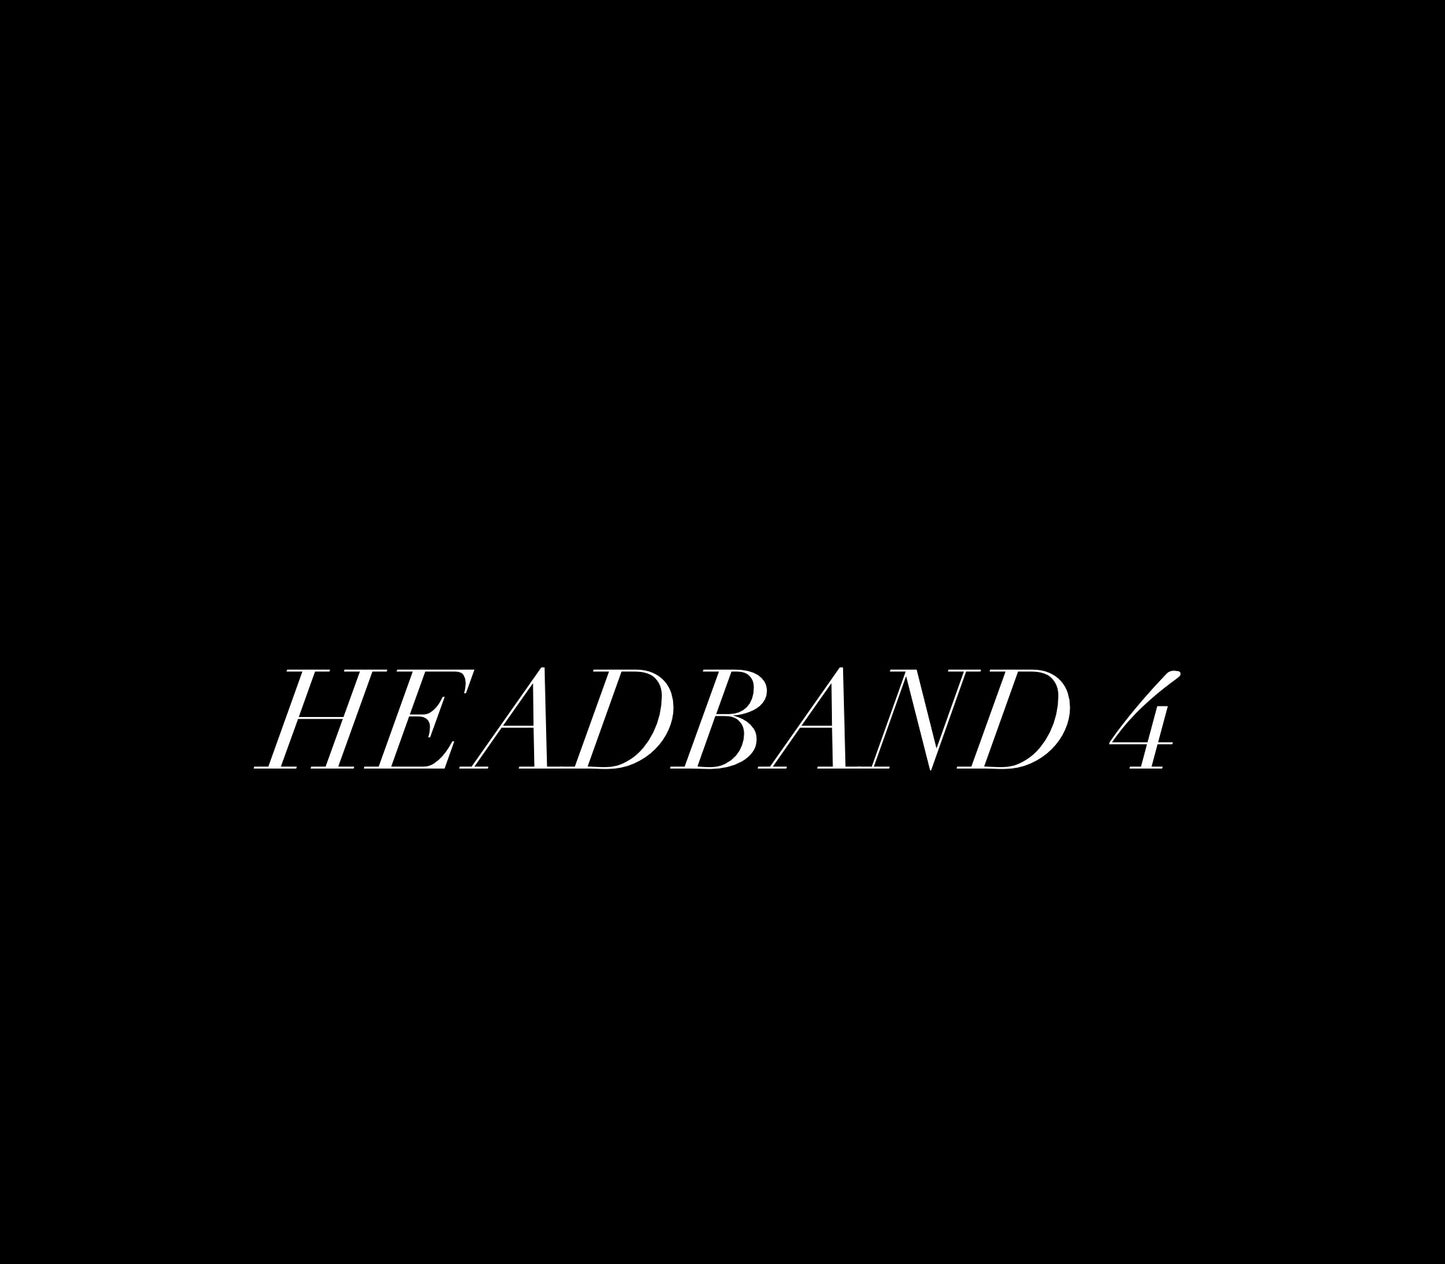 Headband 4